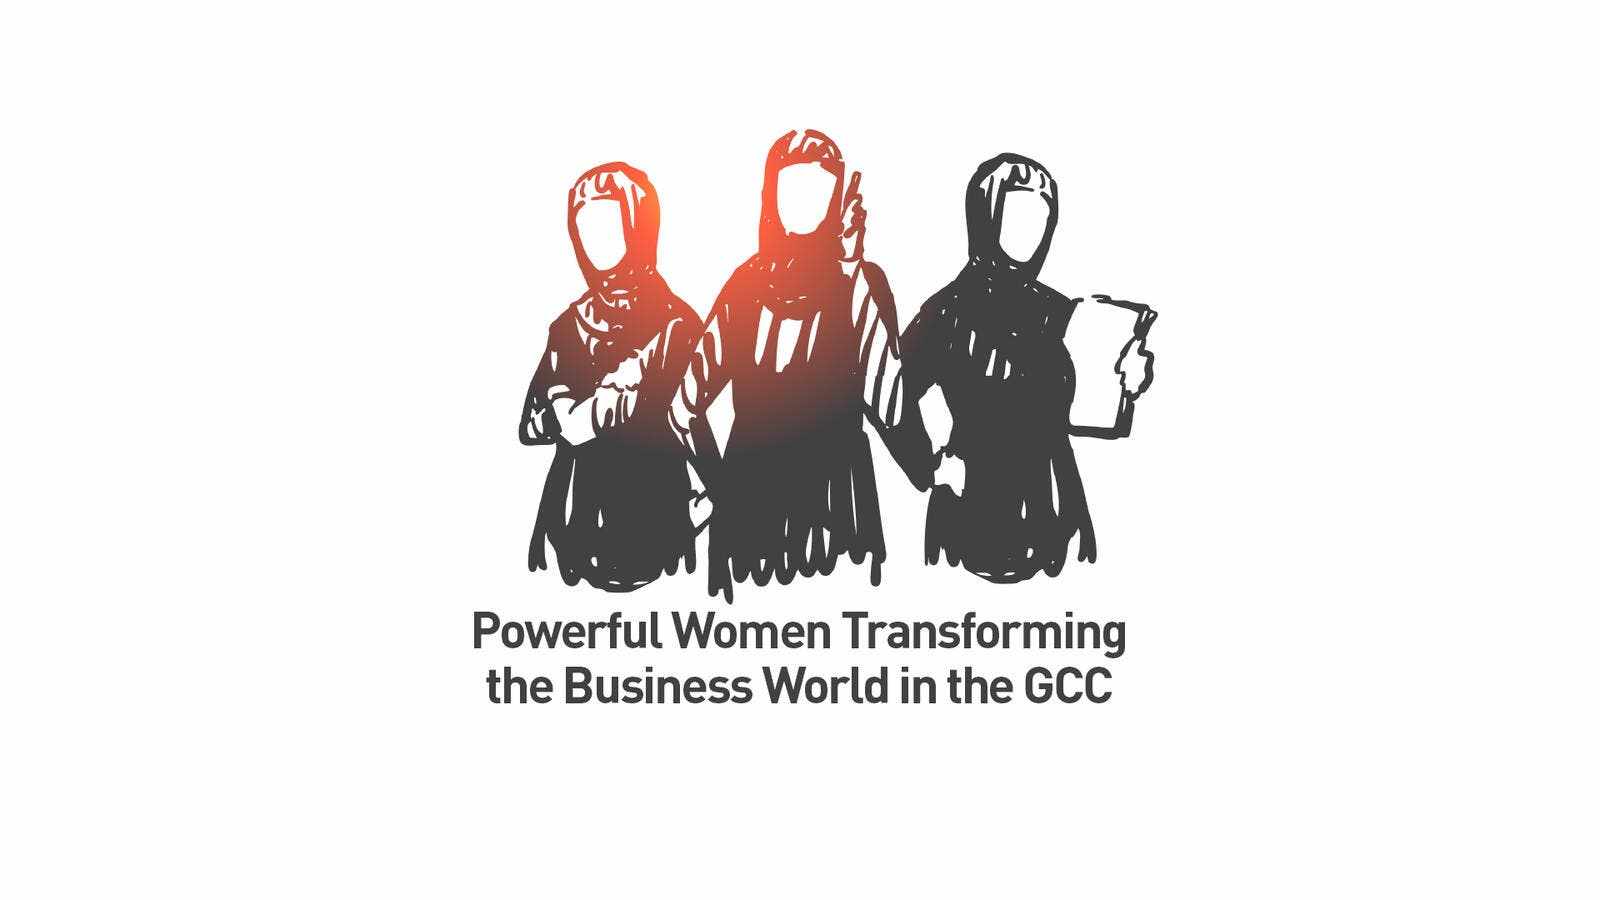 gcc women powerful business world